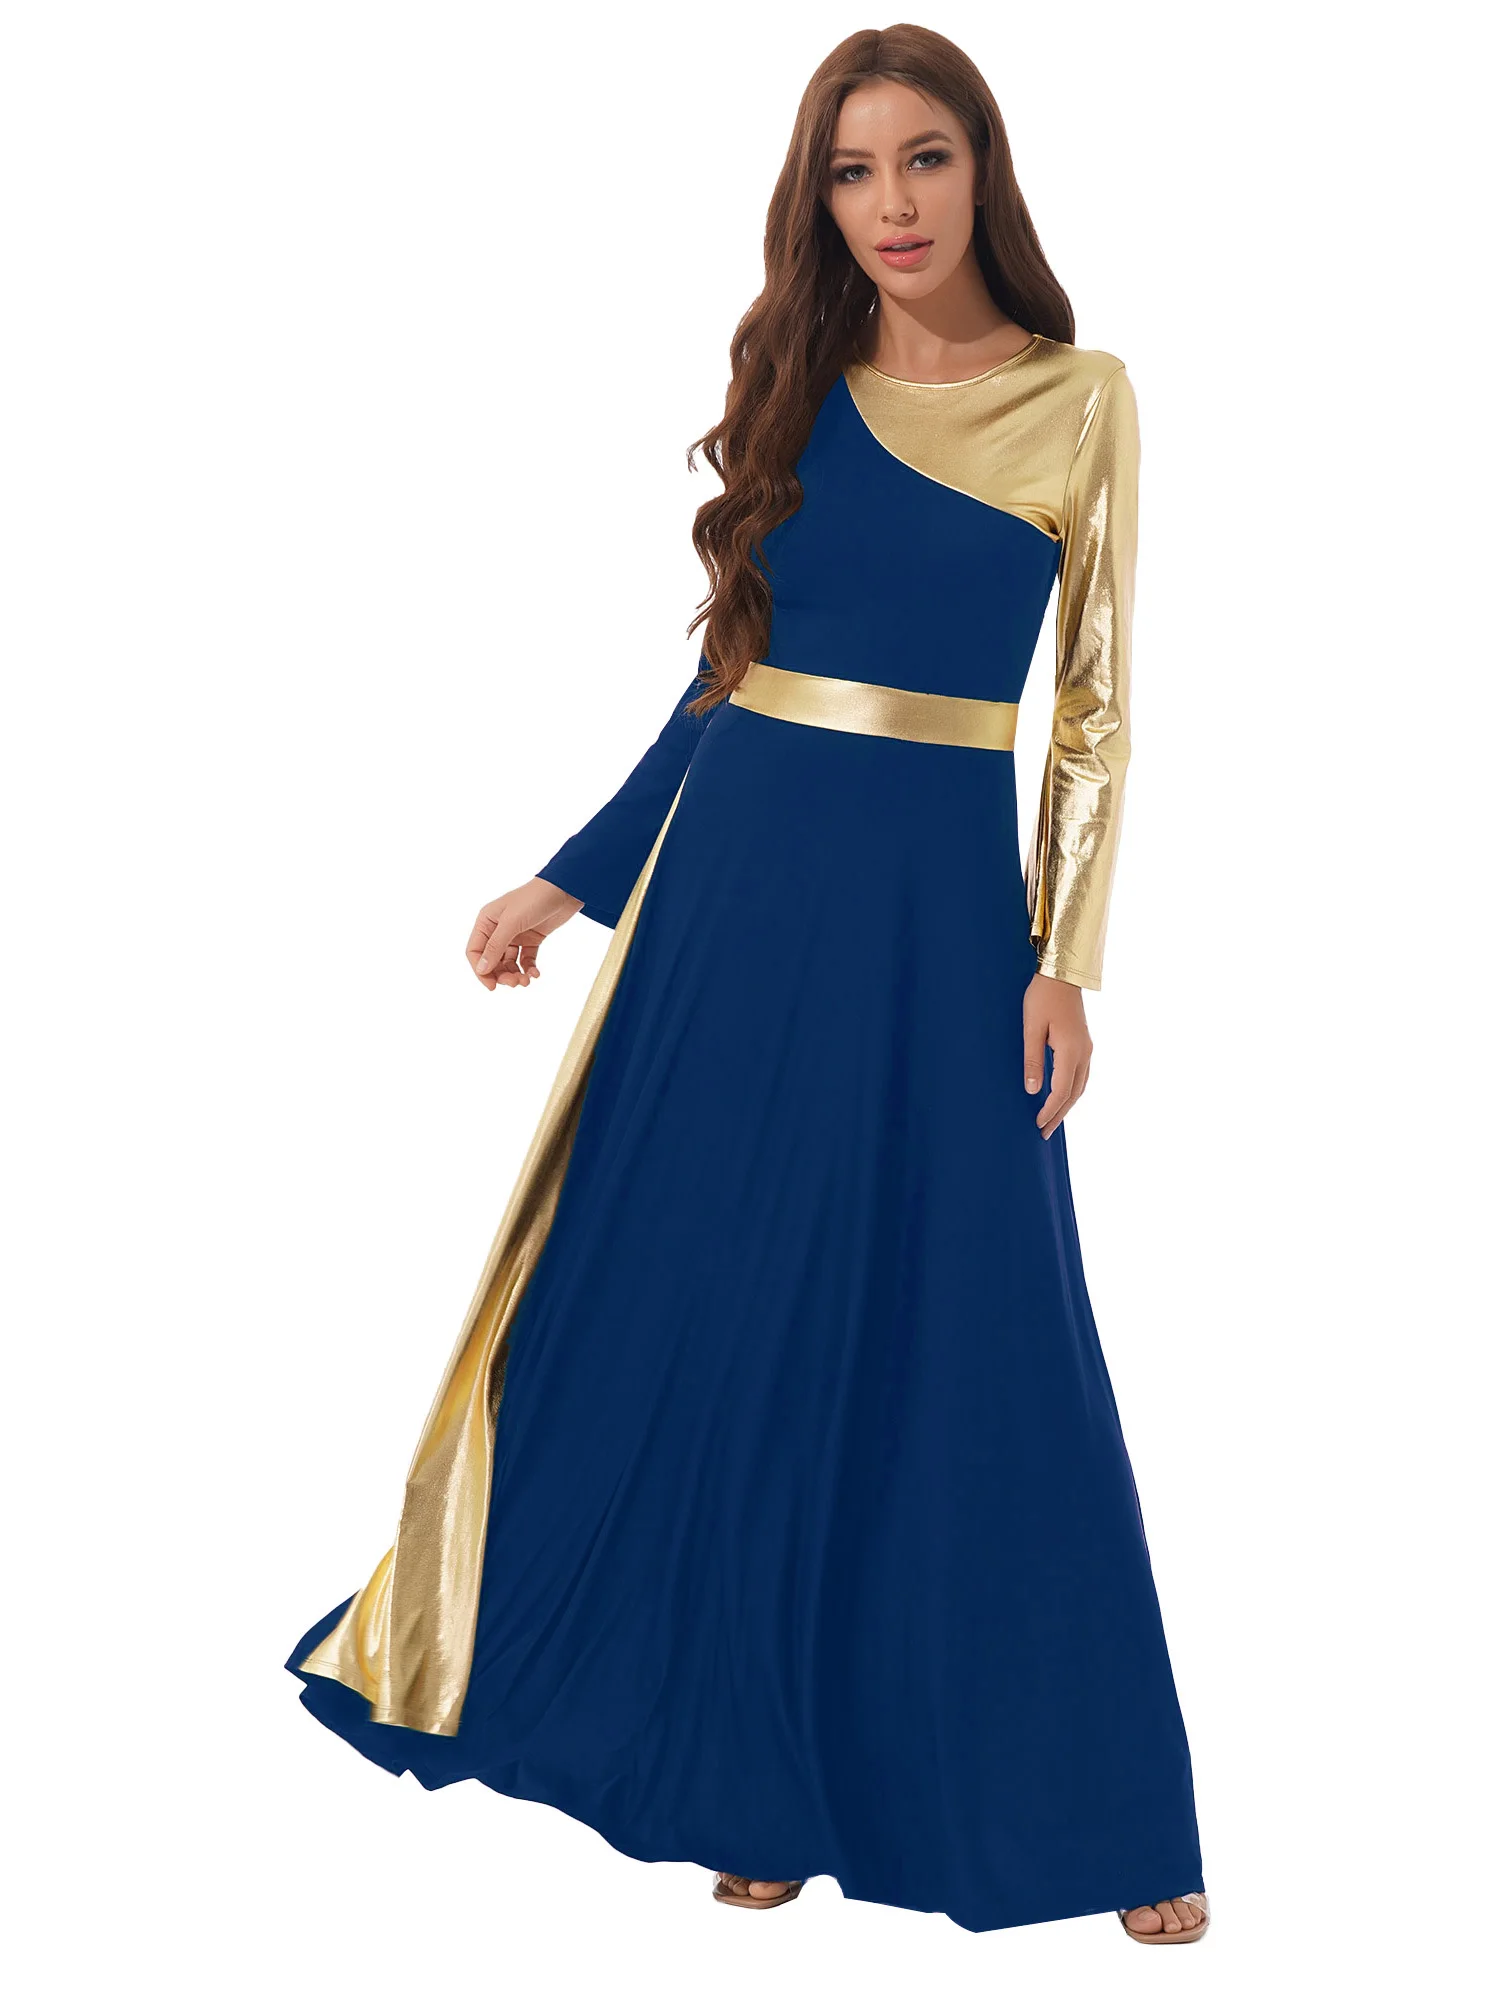 IBAKOM Womens Adult Metallic Gold Color Block Long Sleeve Praise Dance Dress Loose Fit Full Length Liturgical Lyrical Worship 